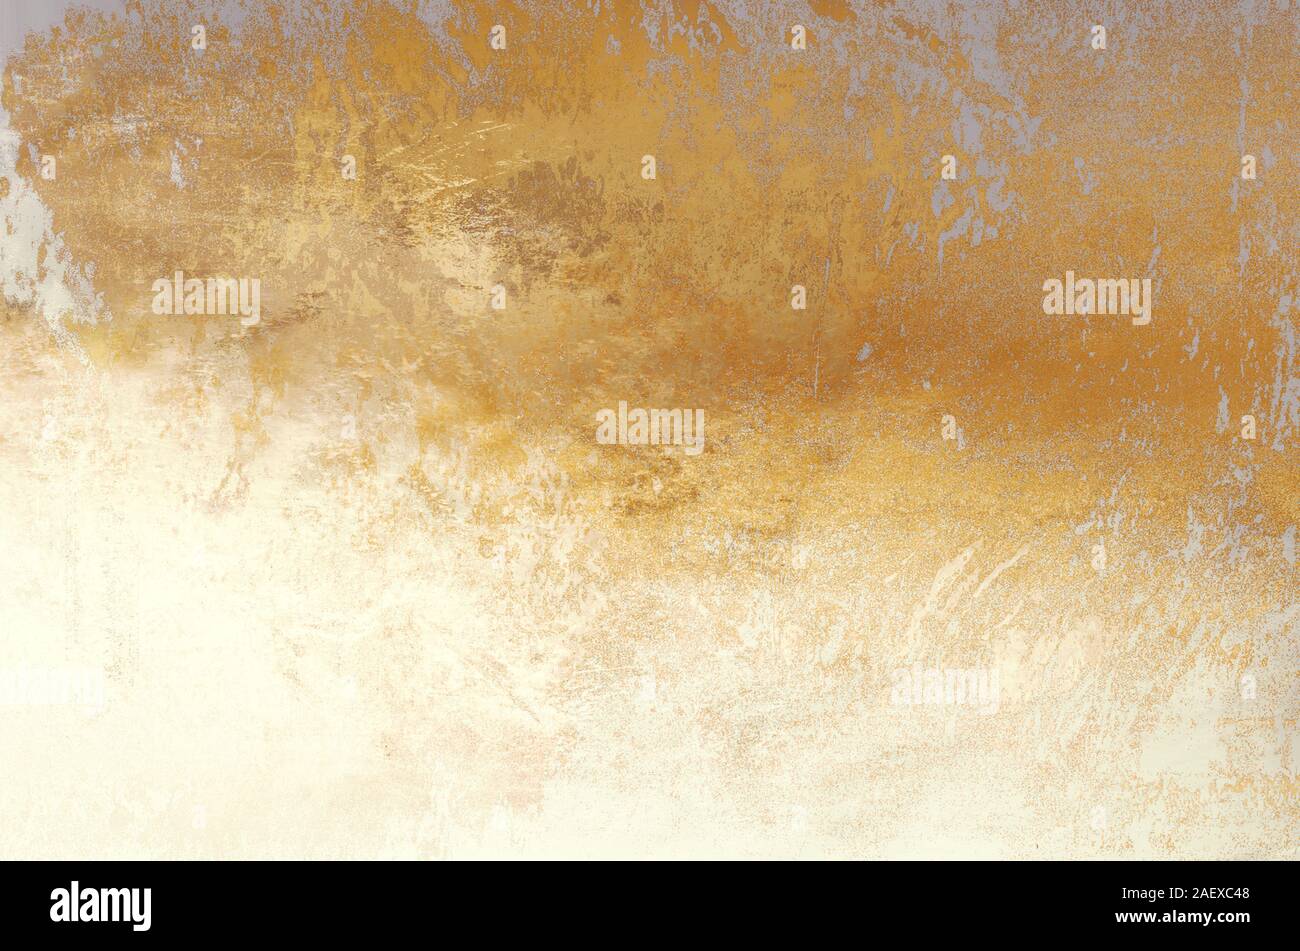 Metallic gold grunge abstract background texture. Stock Photo